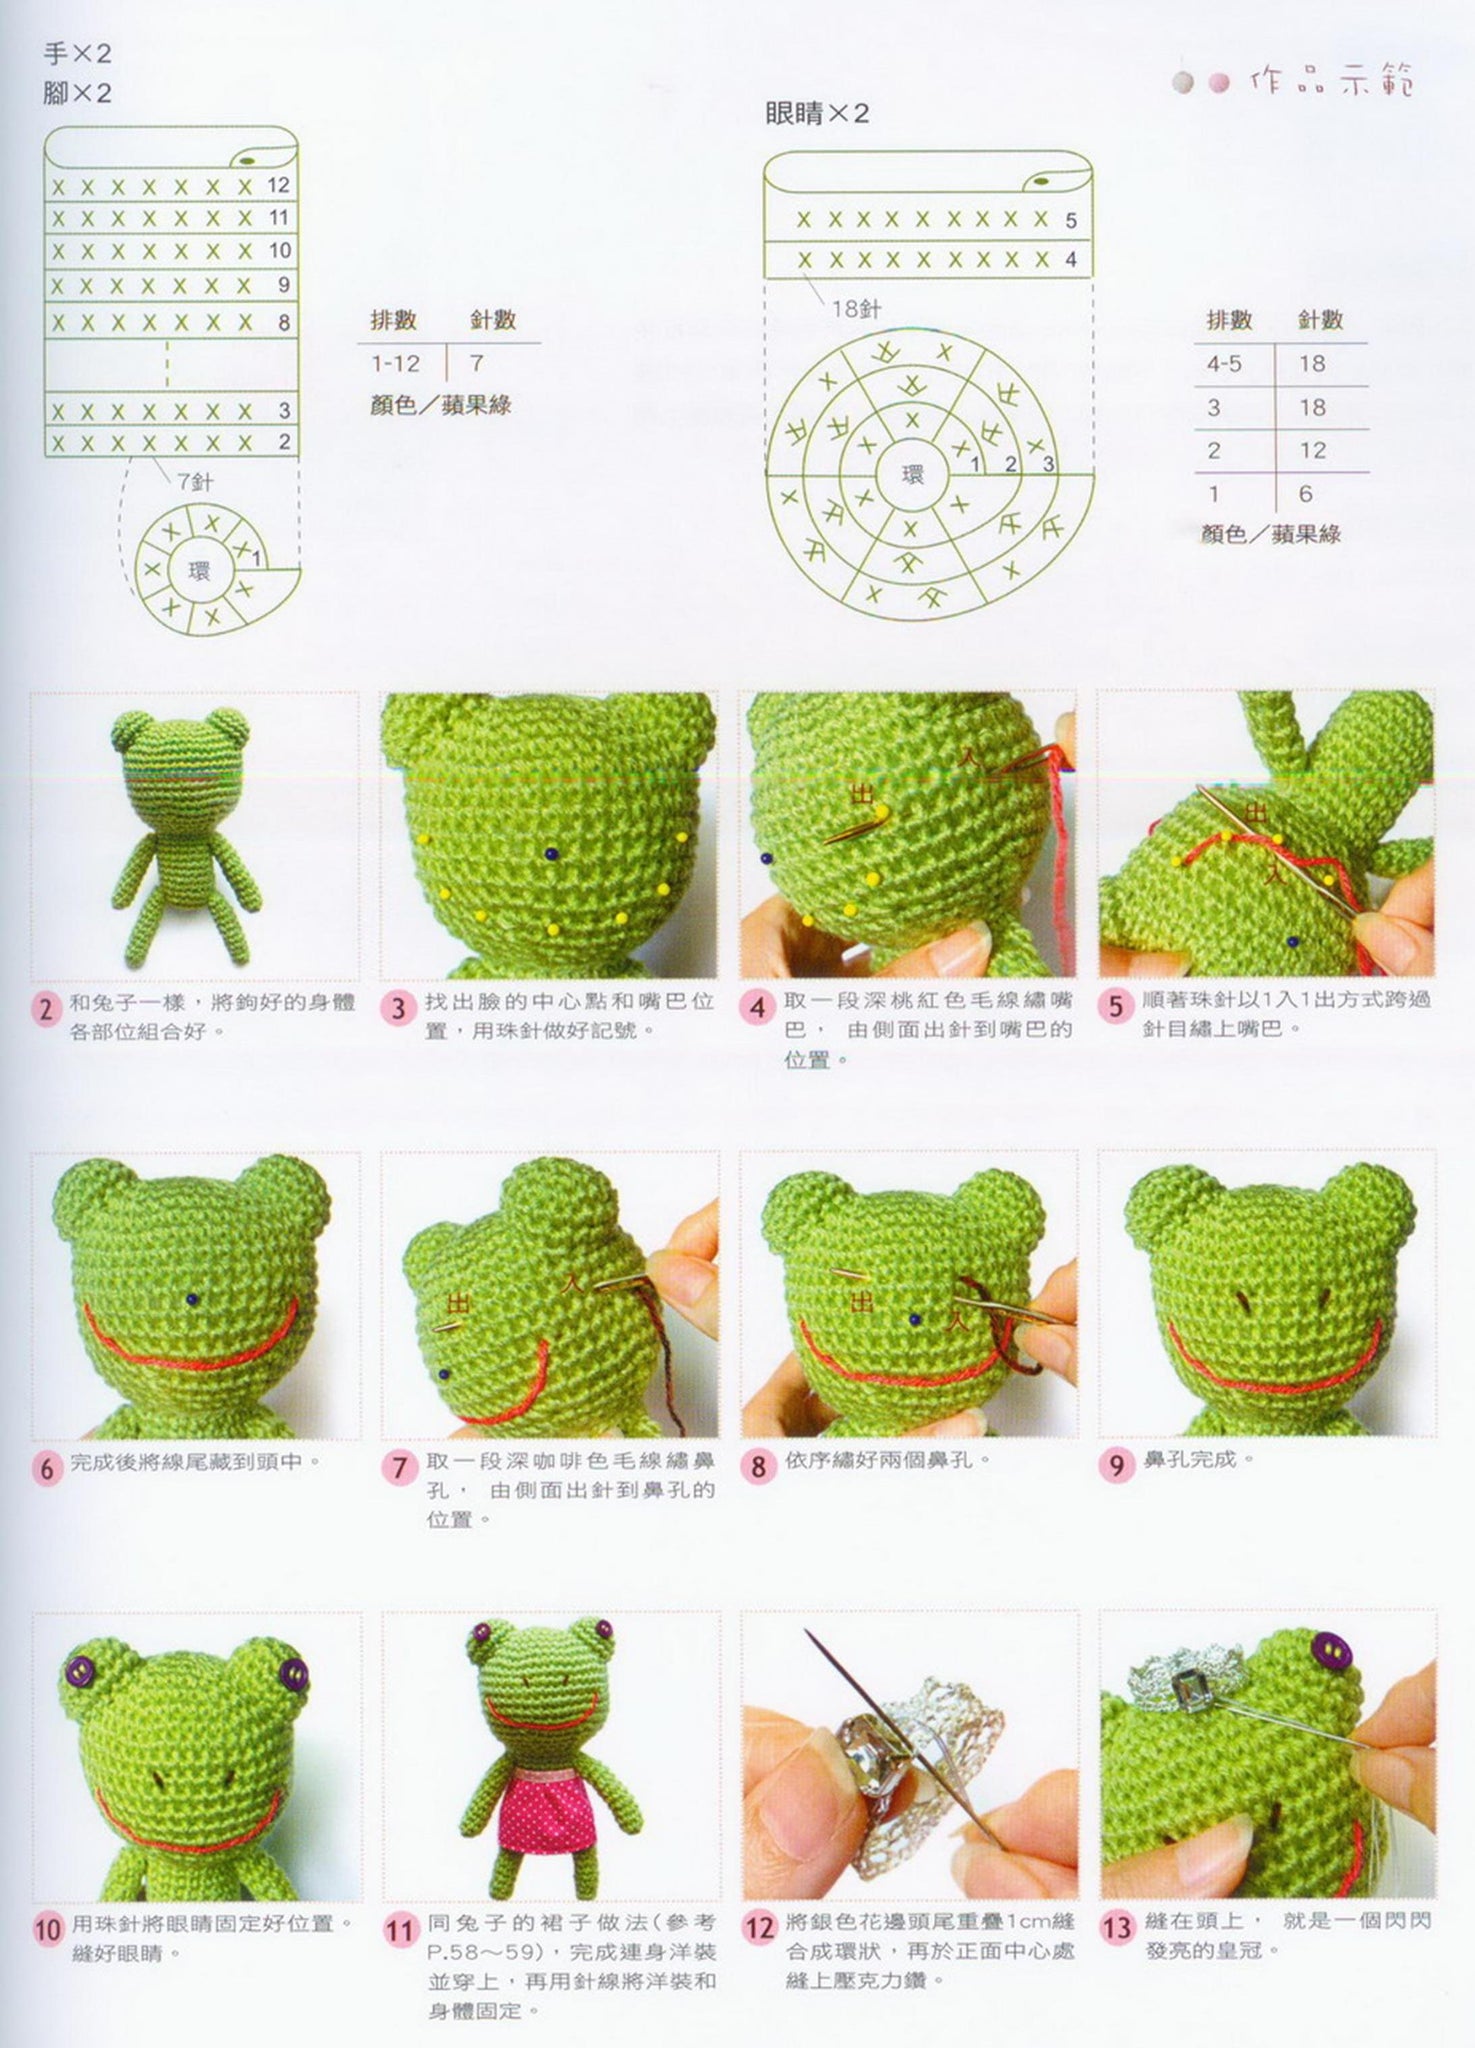 Cute crochet amigurumi frog family